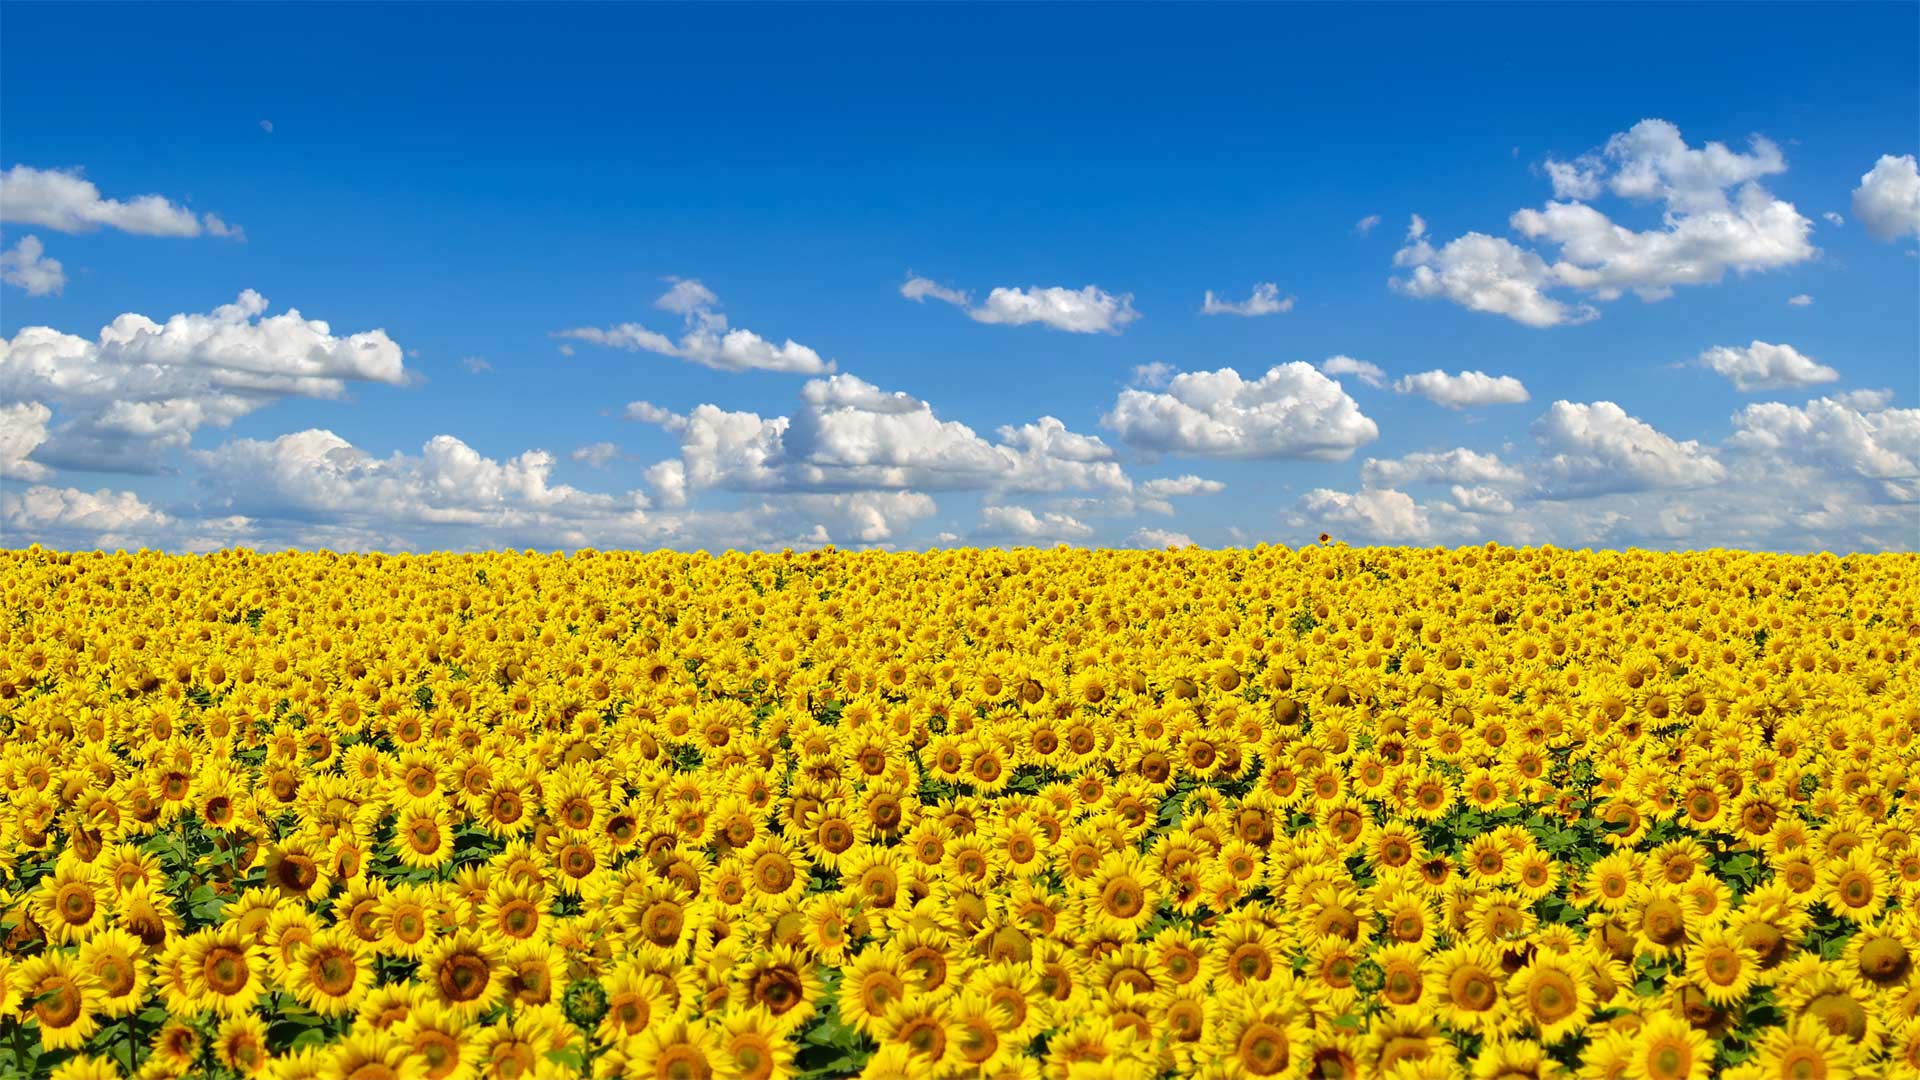 Field of sunflowers, Ukraine's national flower - Oleksandrum/Shutterstock)